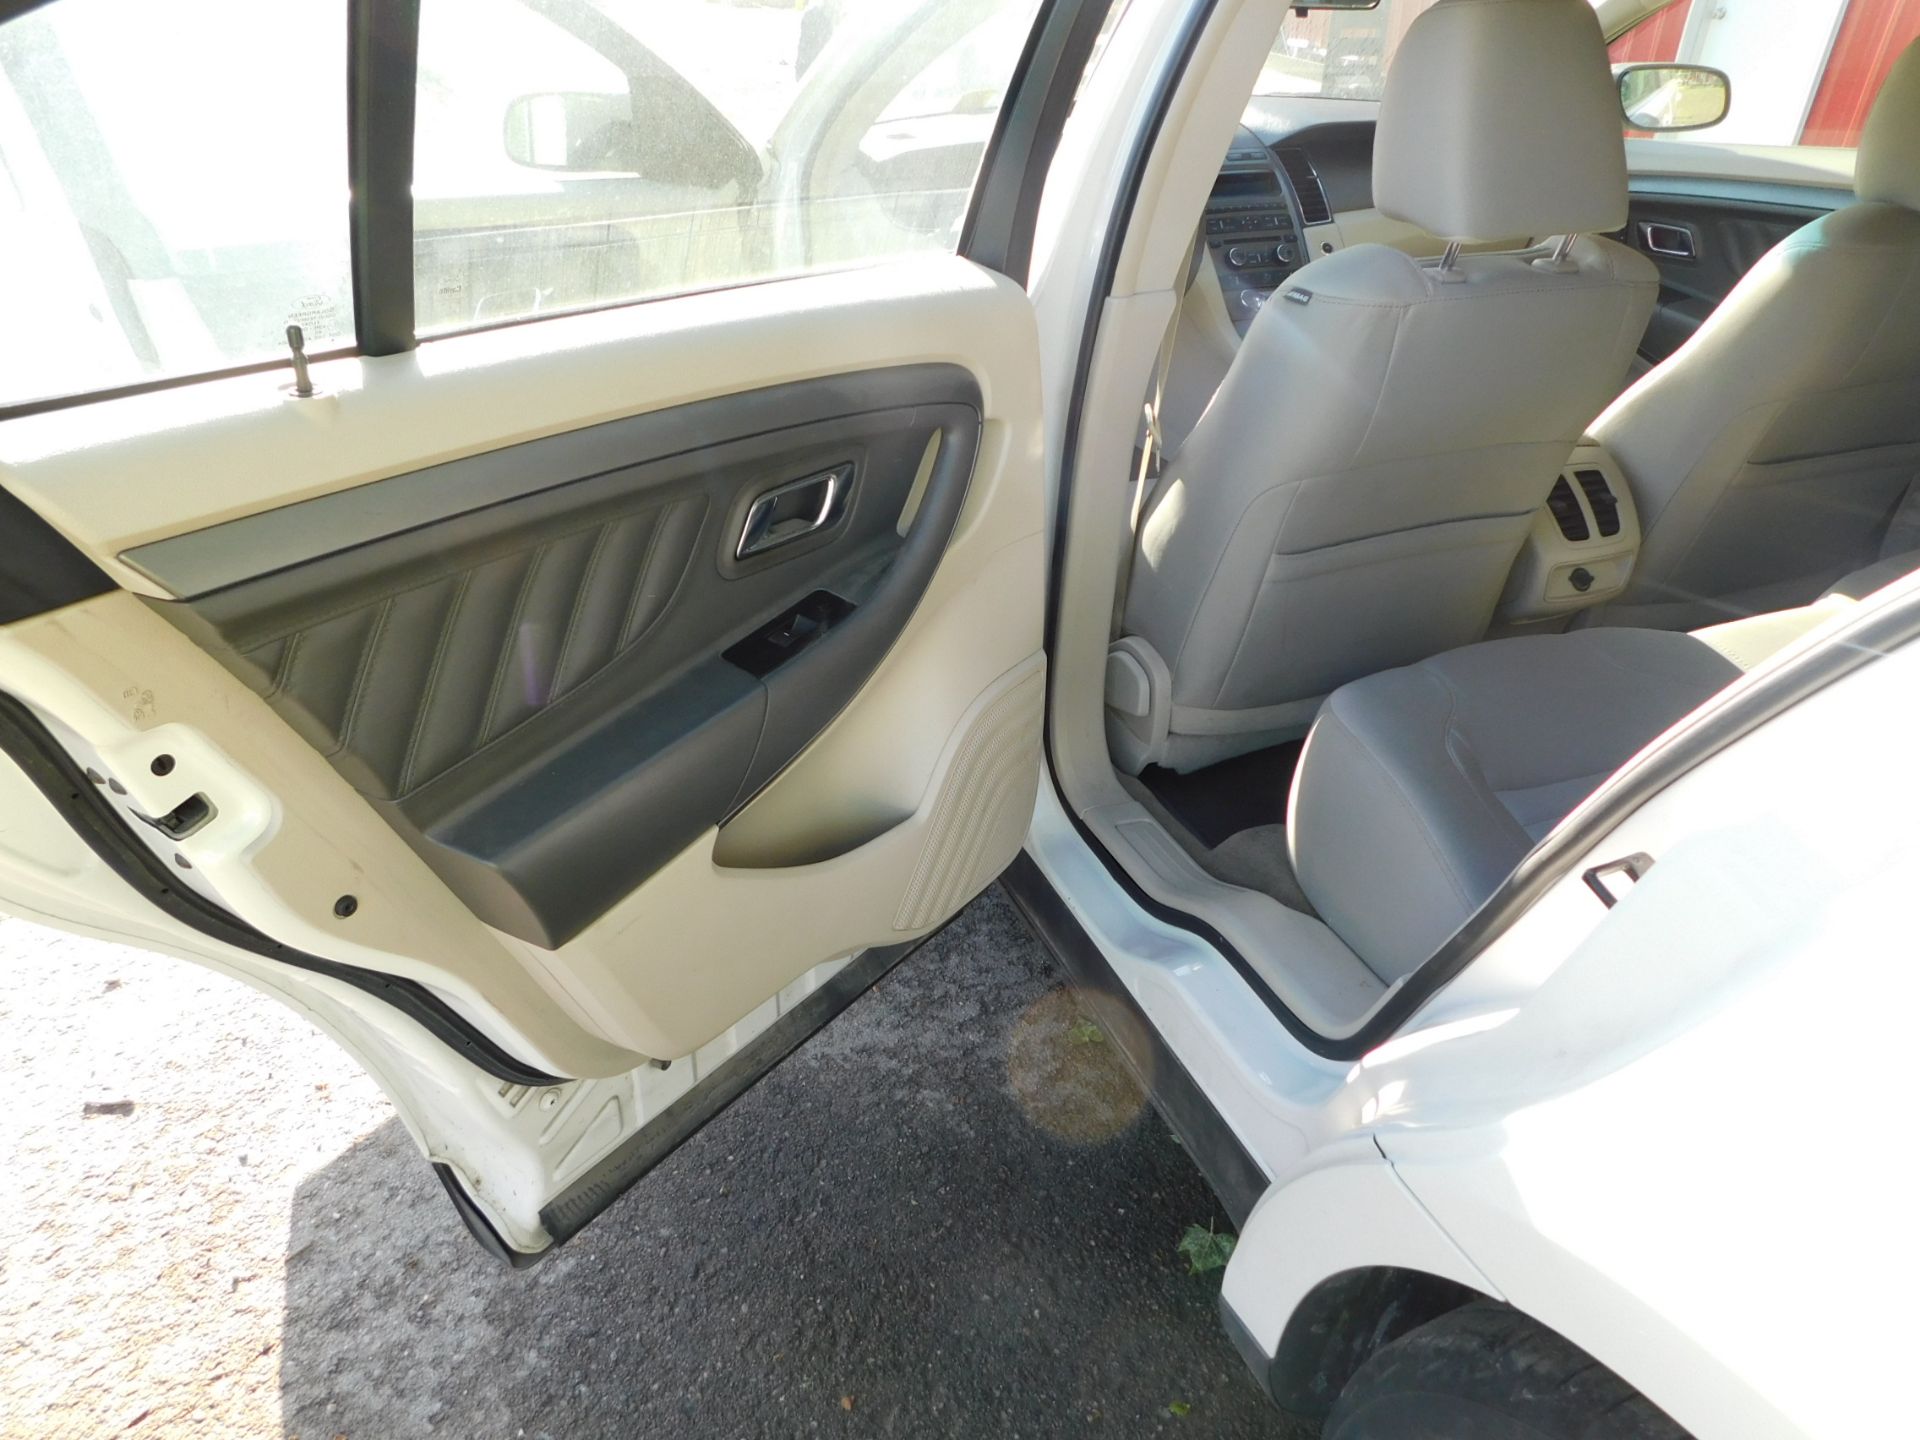 2011 Ford Taurus 4-Door Sedan vin 1FAHP20WXBG16330, Automatic Transmission, PW,PL, AC, Cloth - Image 29 of 41